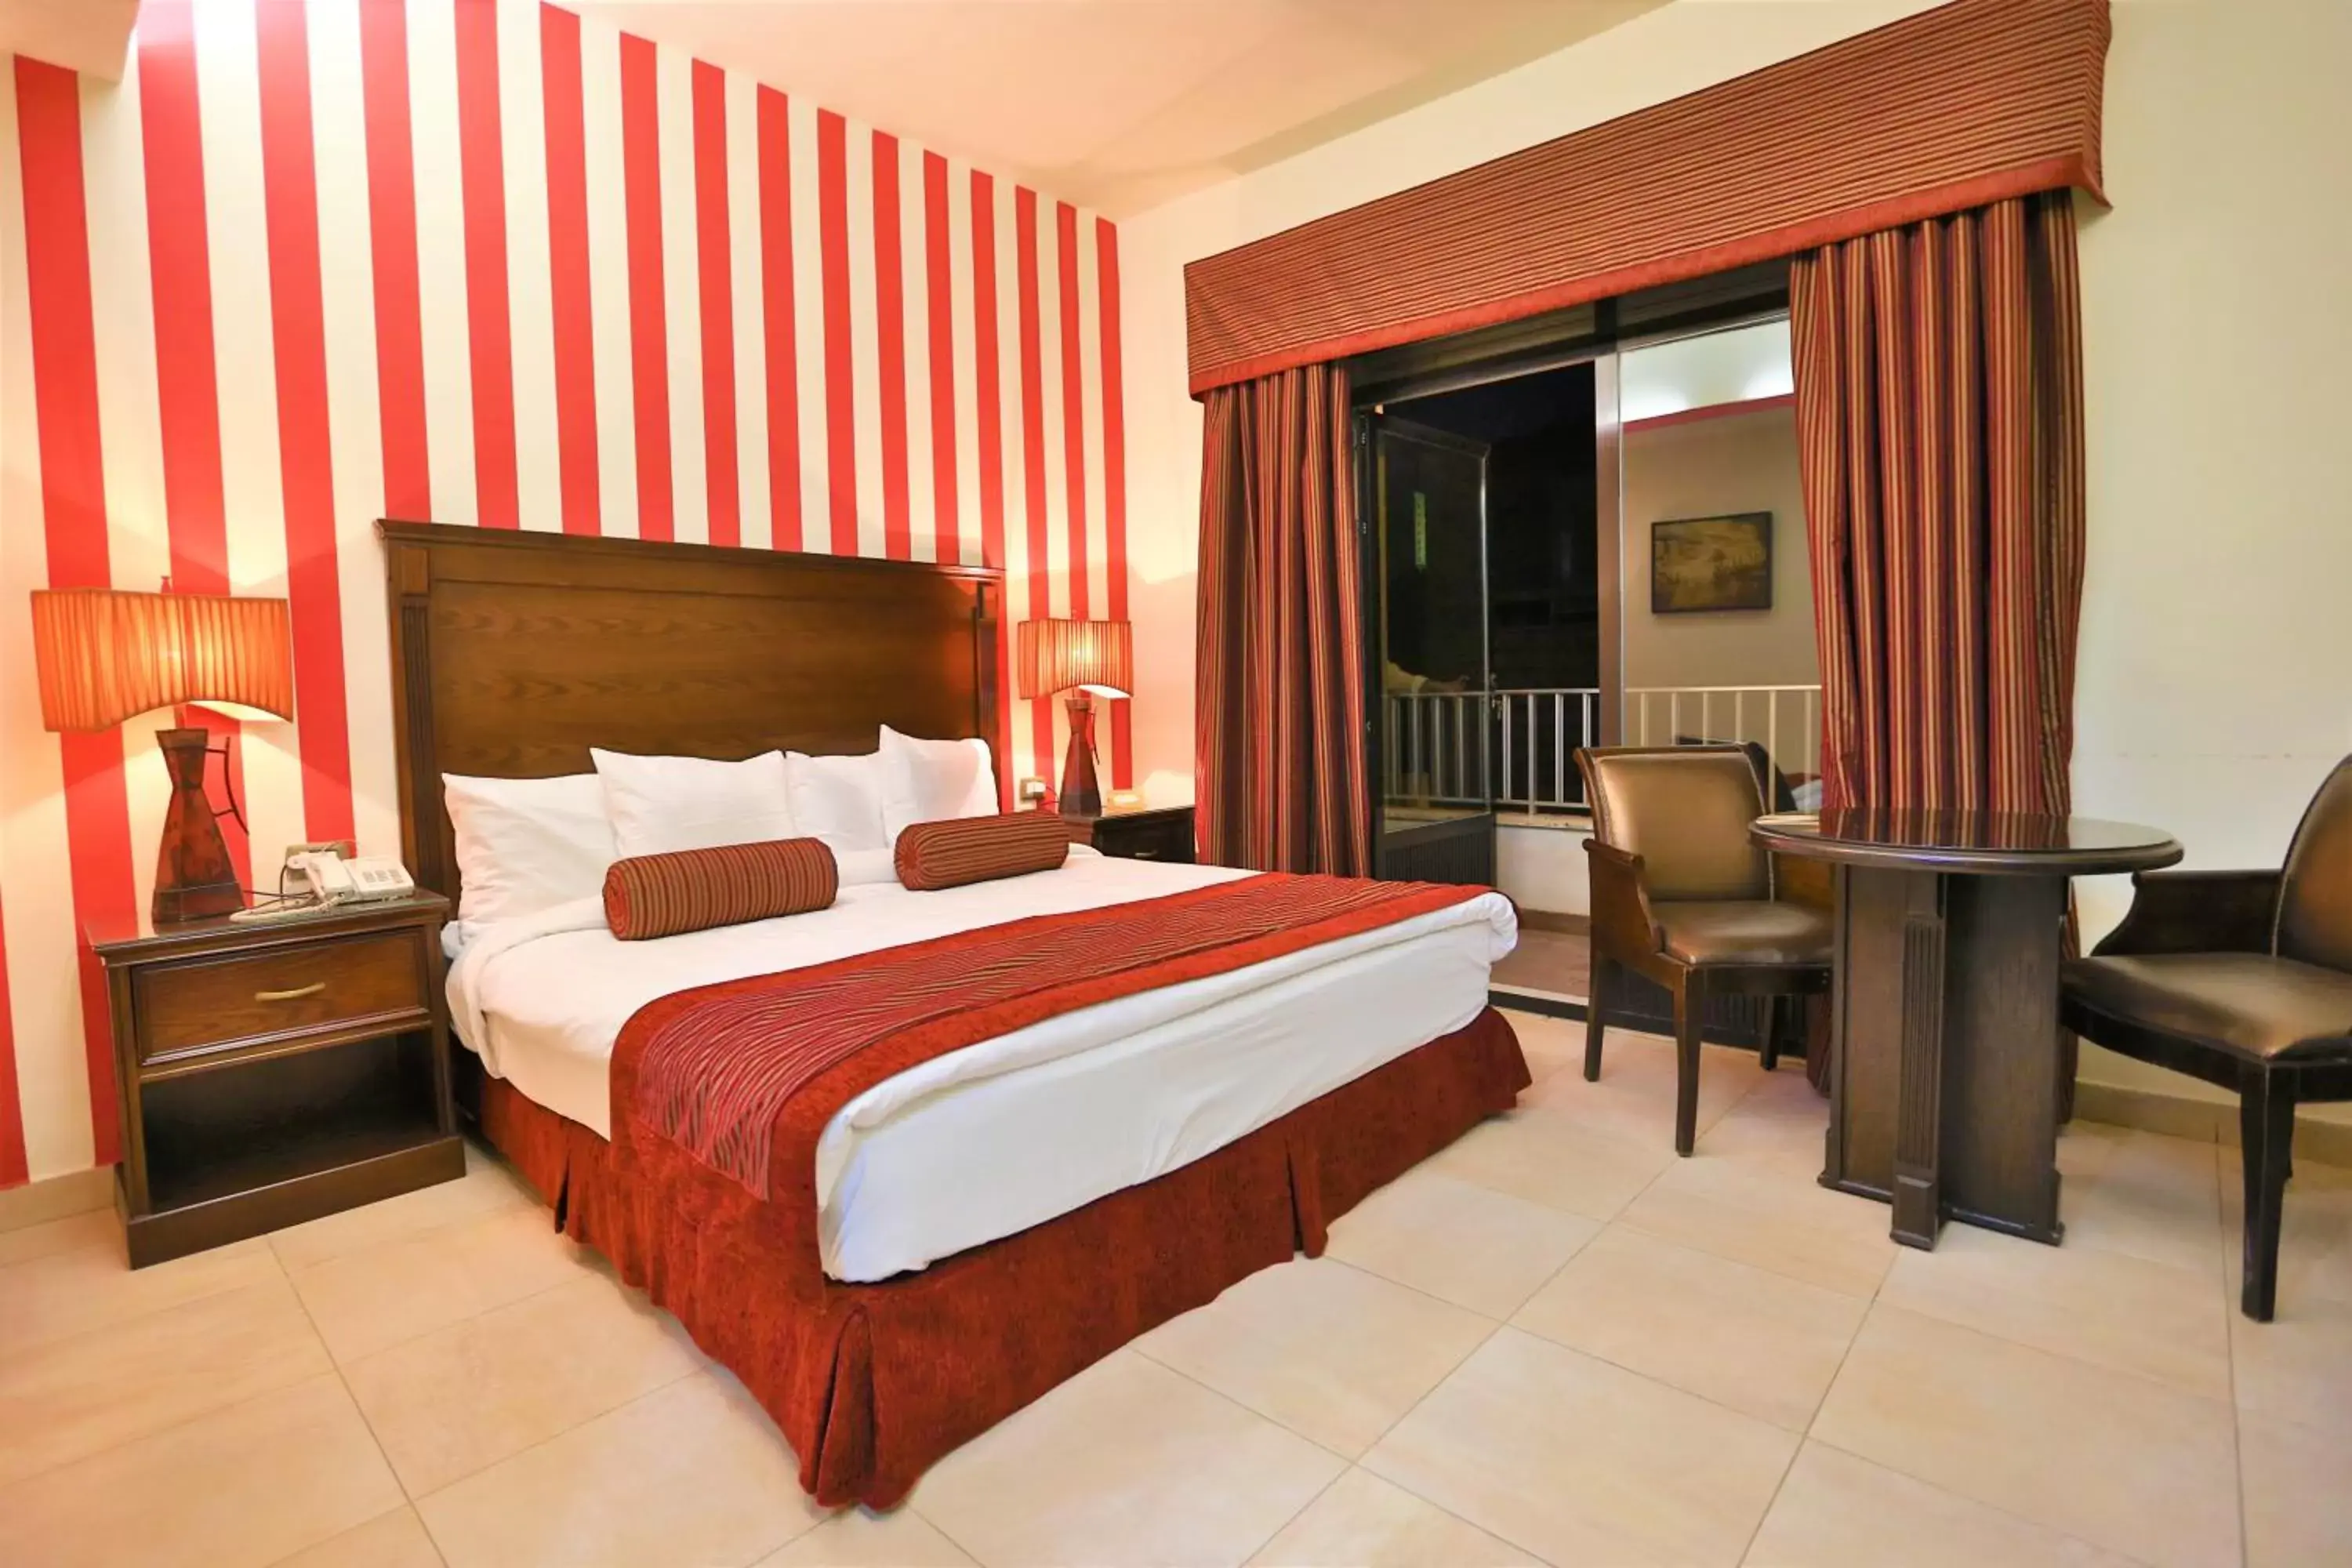 Bedroom, Bed in Hisham Hotel